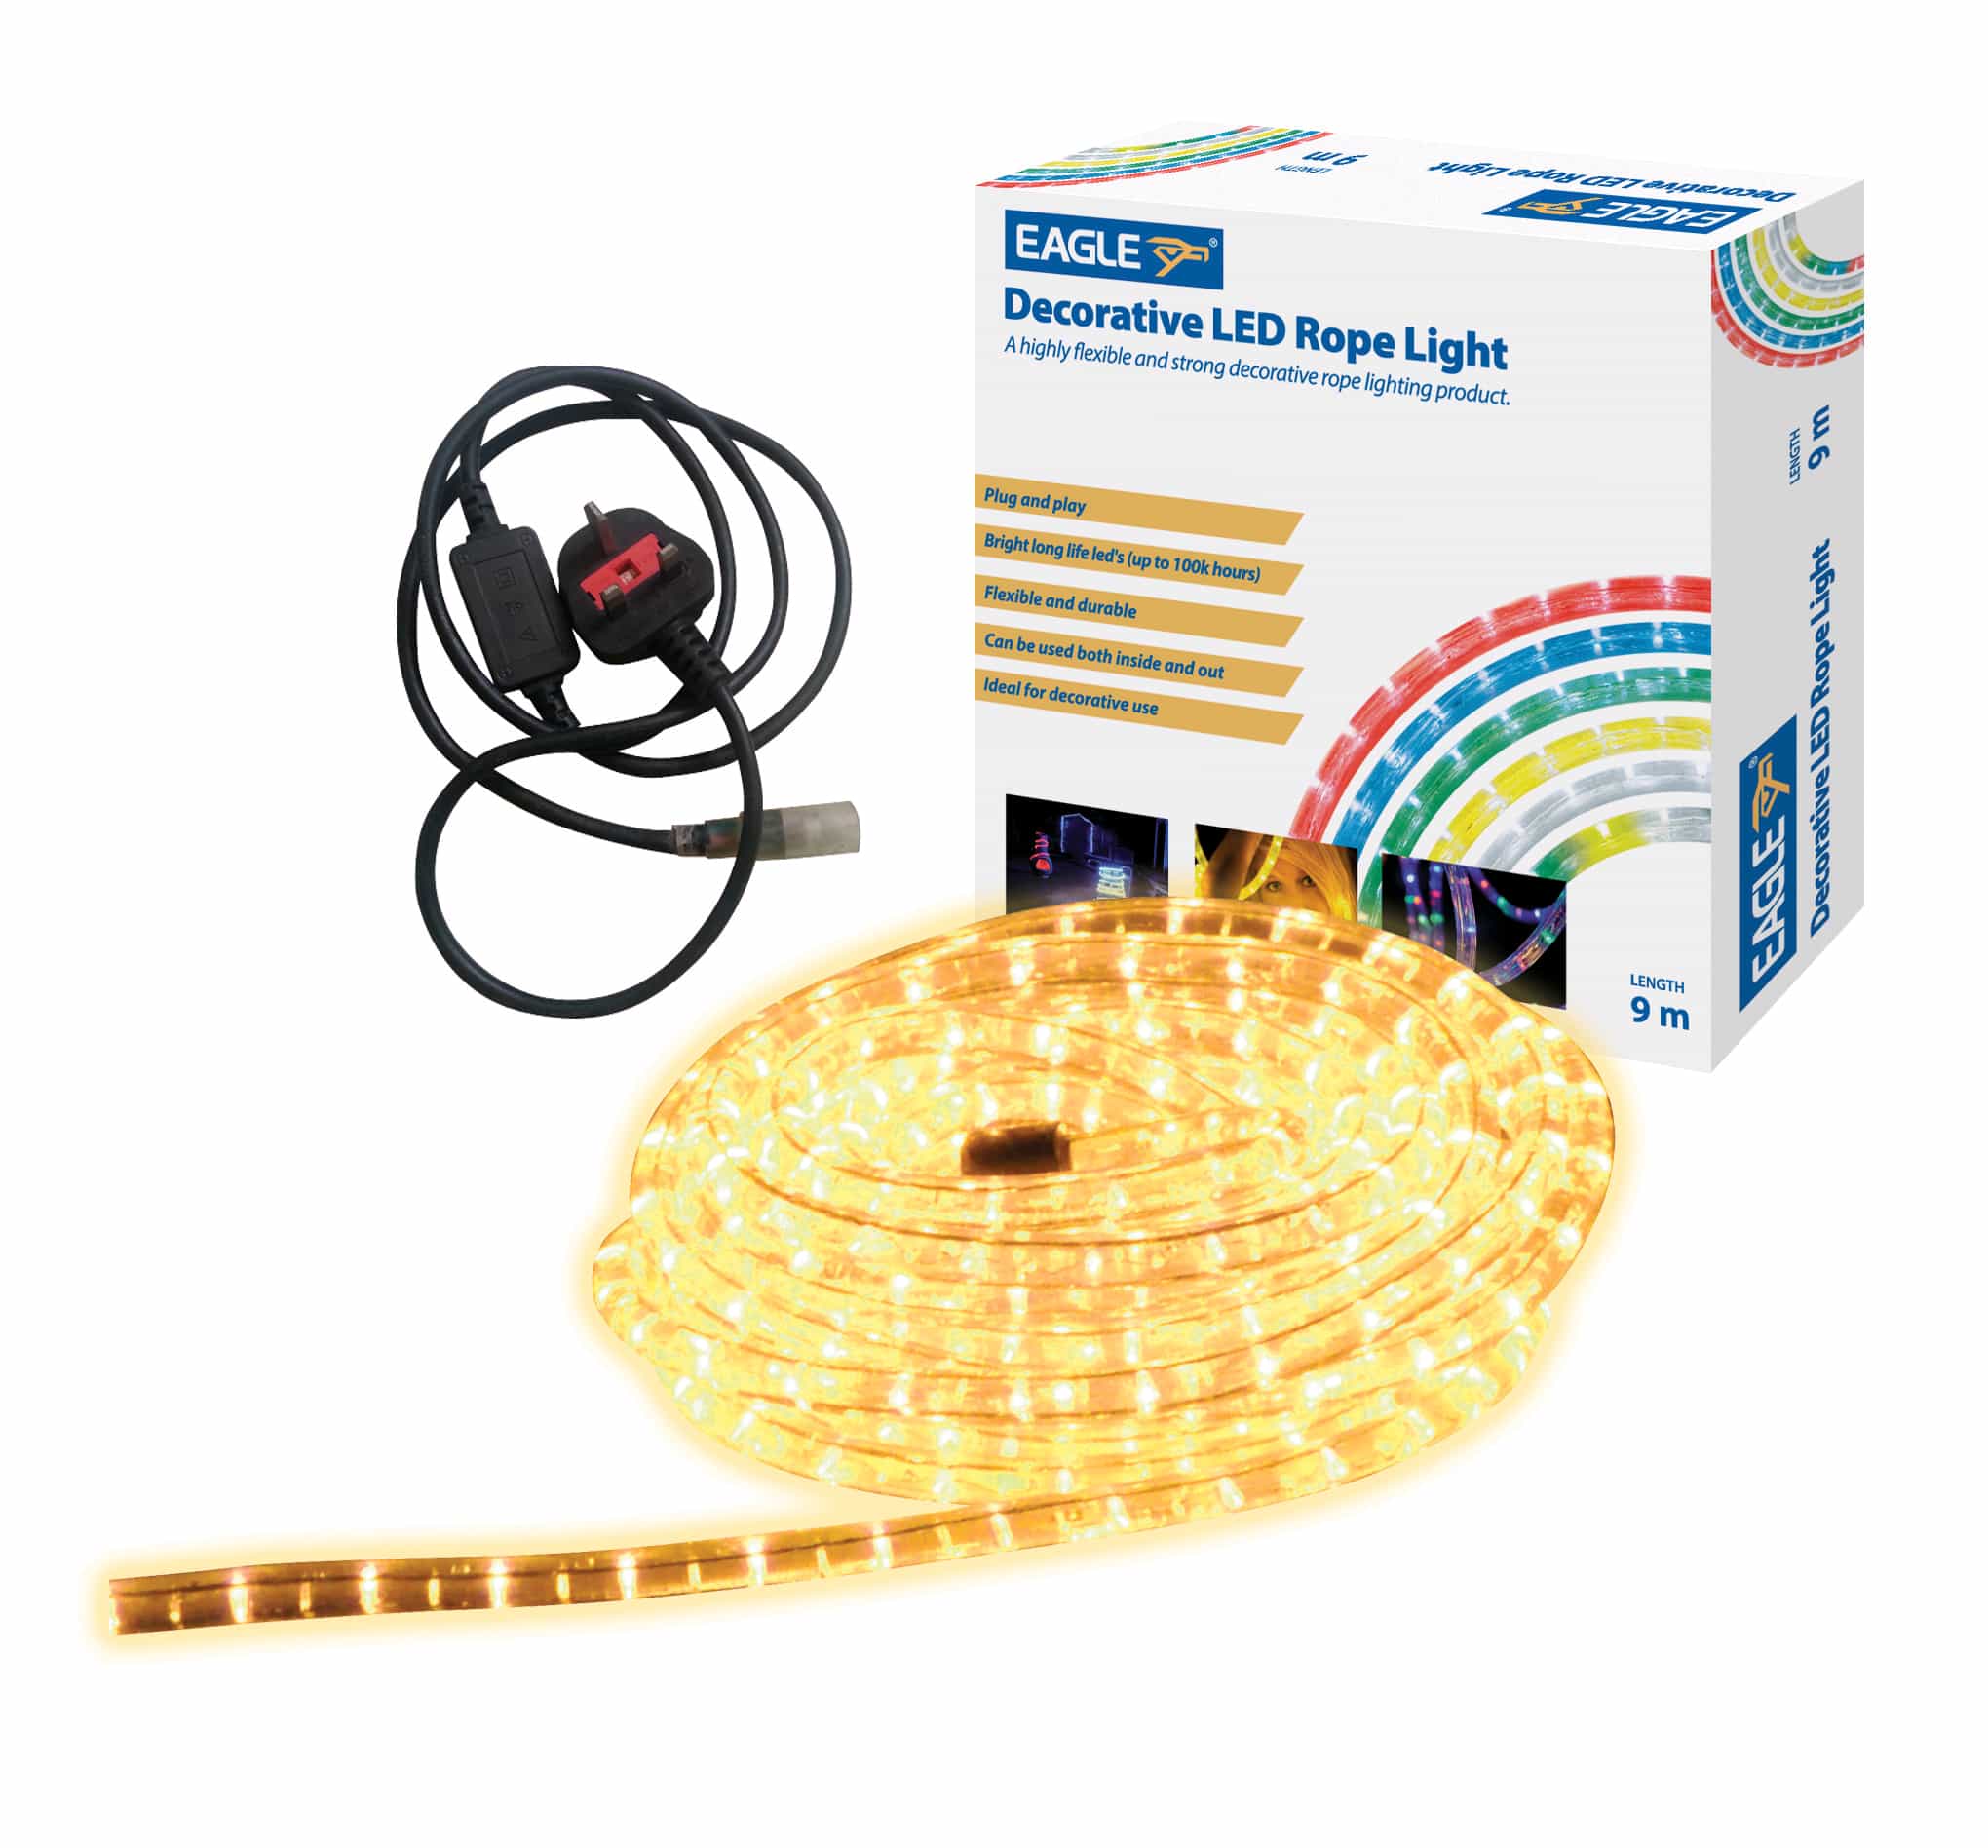 LED Rope Light Yellow per metre (45m Coil) (Eagle)